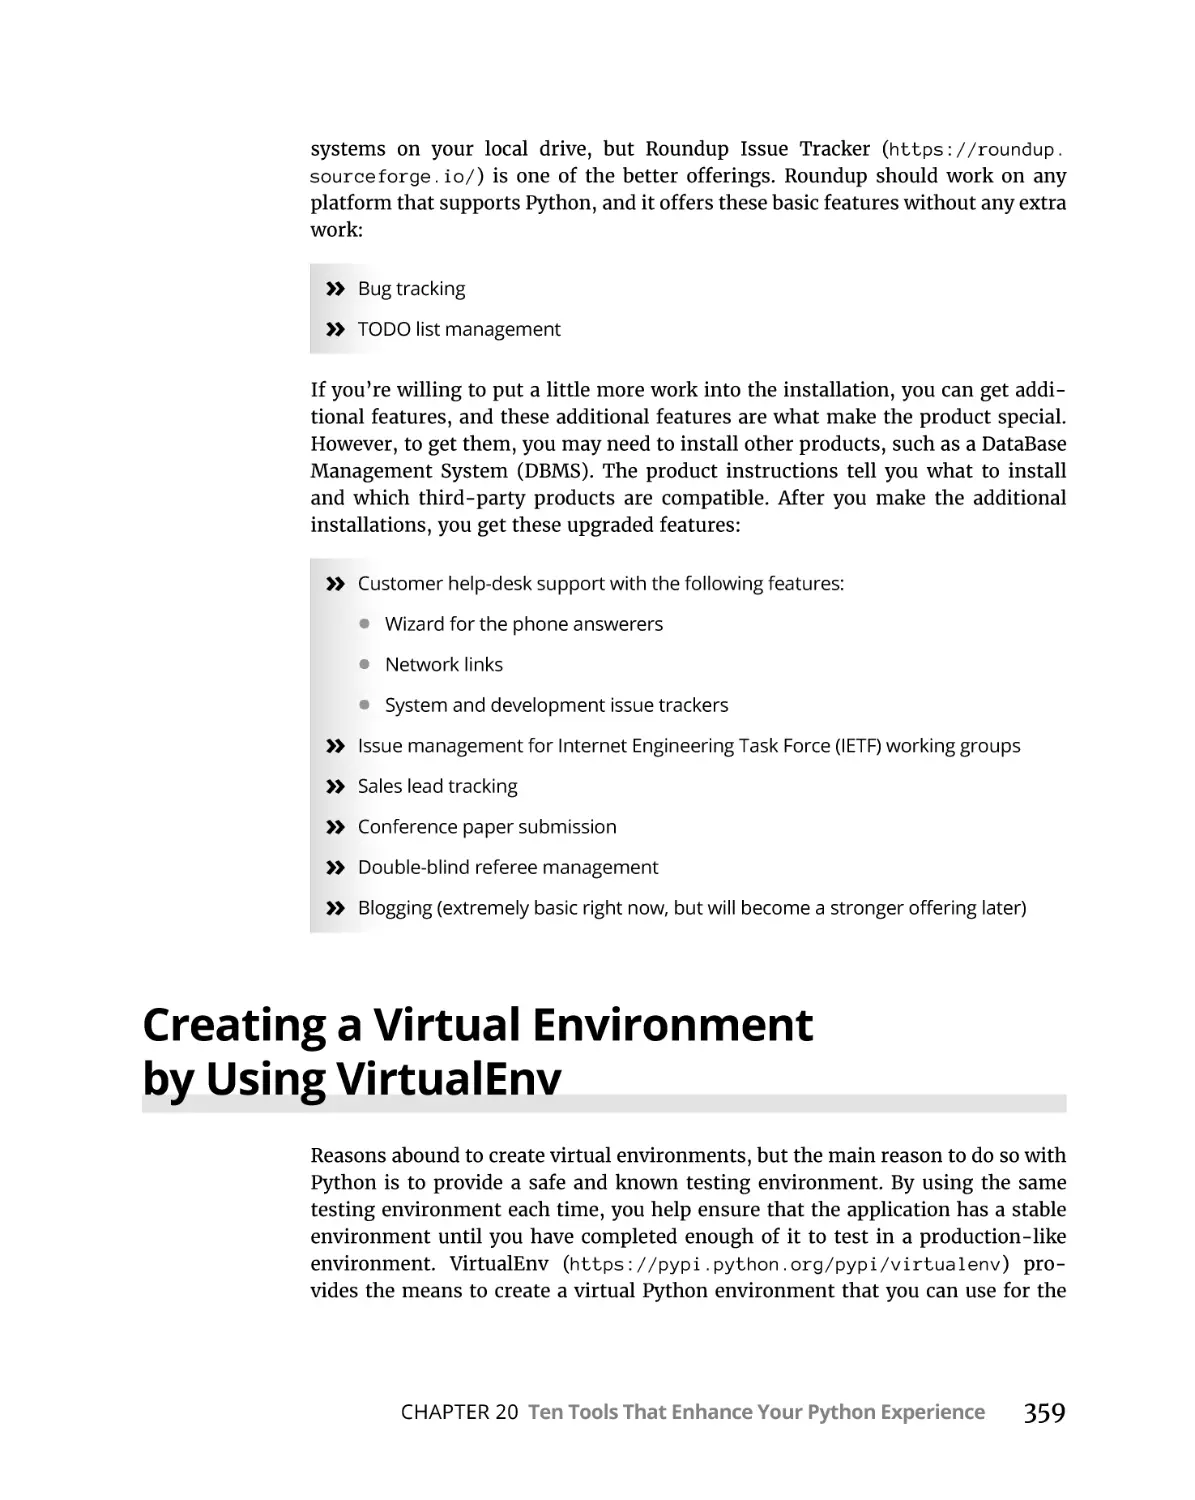 Creating a Virtual Environment by Using VirtualEnv